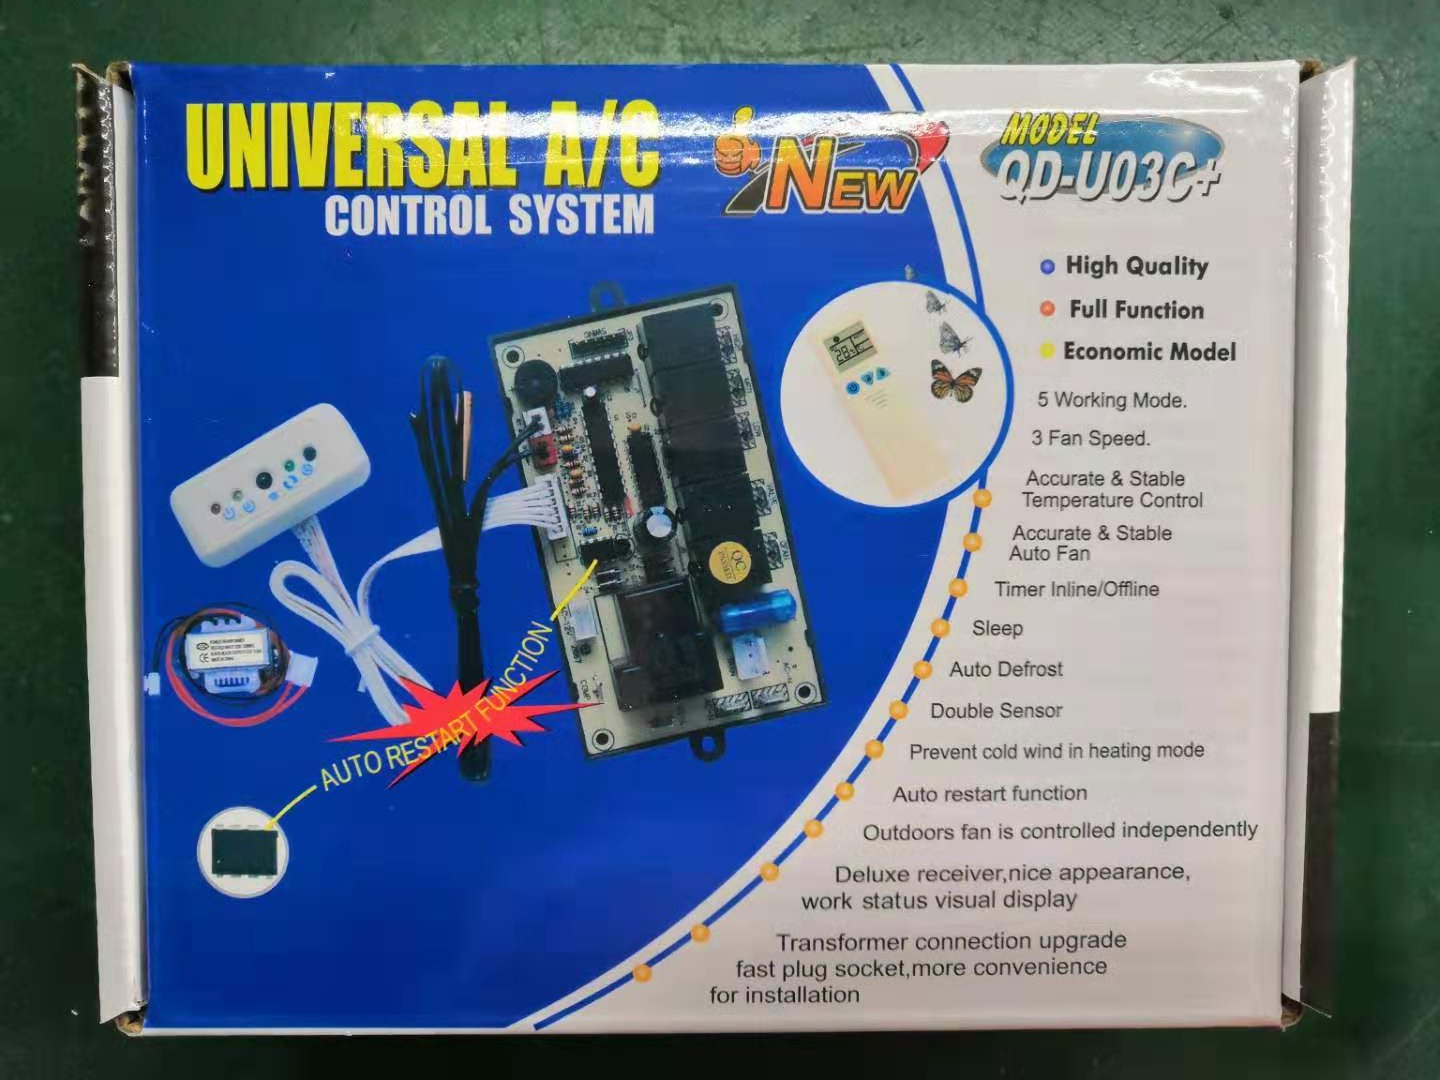 QD-U03C+ Control remoto universal para aire acondicionado